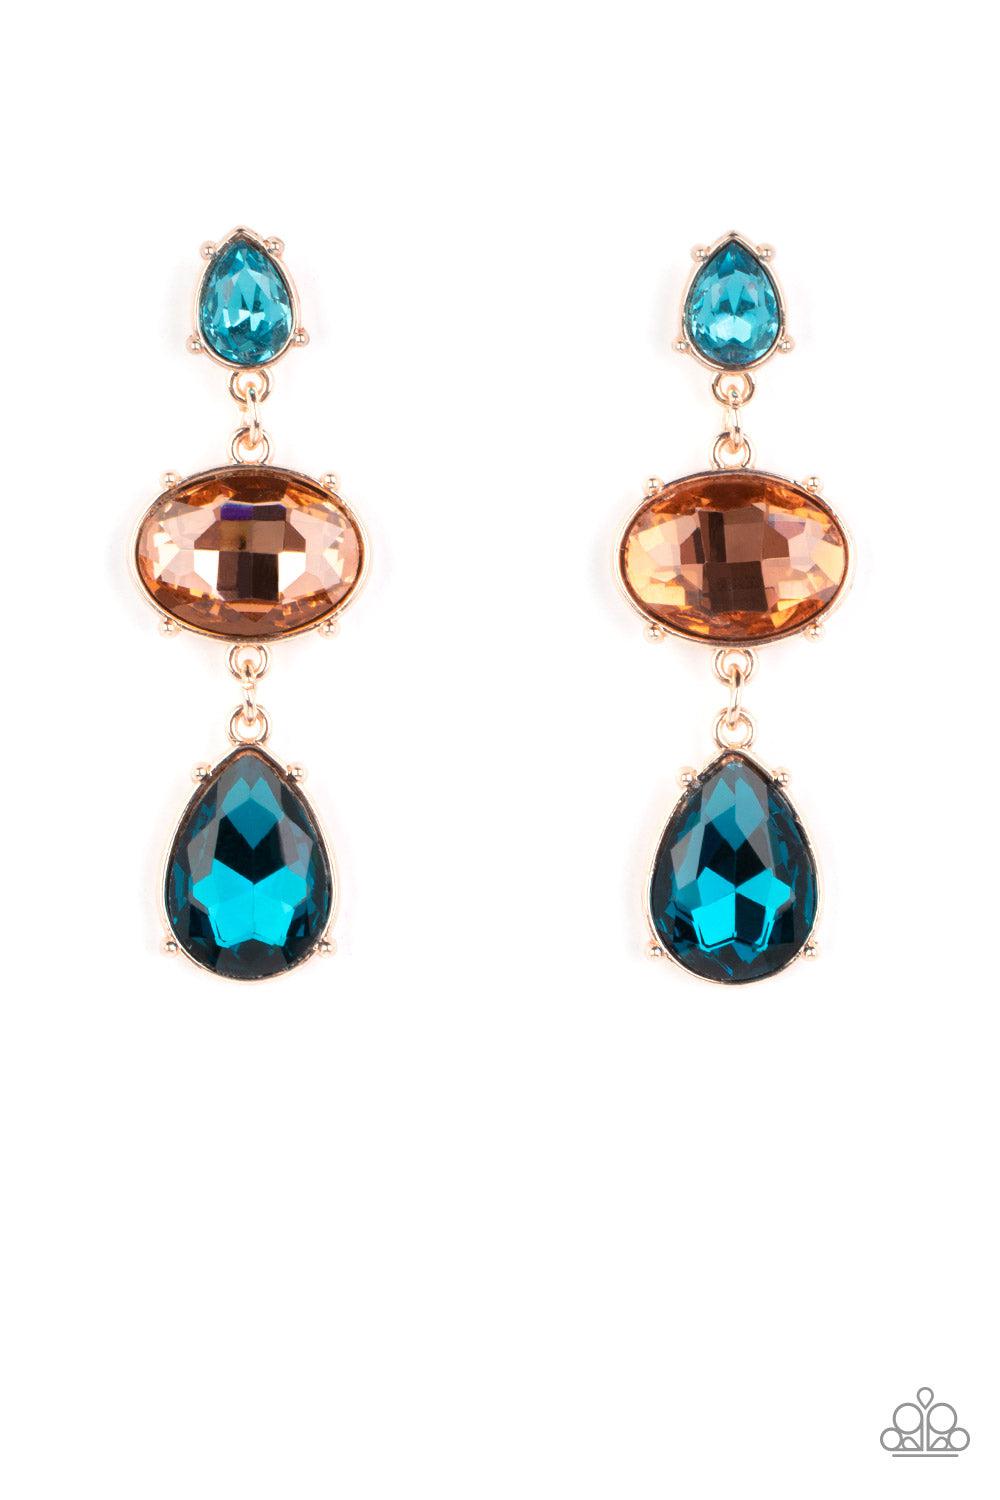 Royal Appeal Multi Blue &amp; Peach Rhinestone Earrings - Paparazzi Accessories- lightbox - CarasShop.com - $5 Jewelry by Cara Jewels